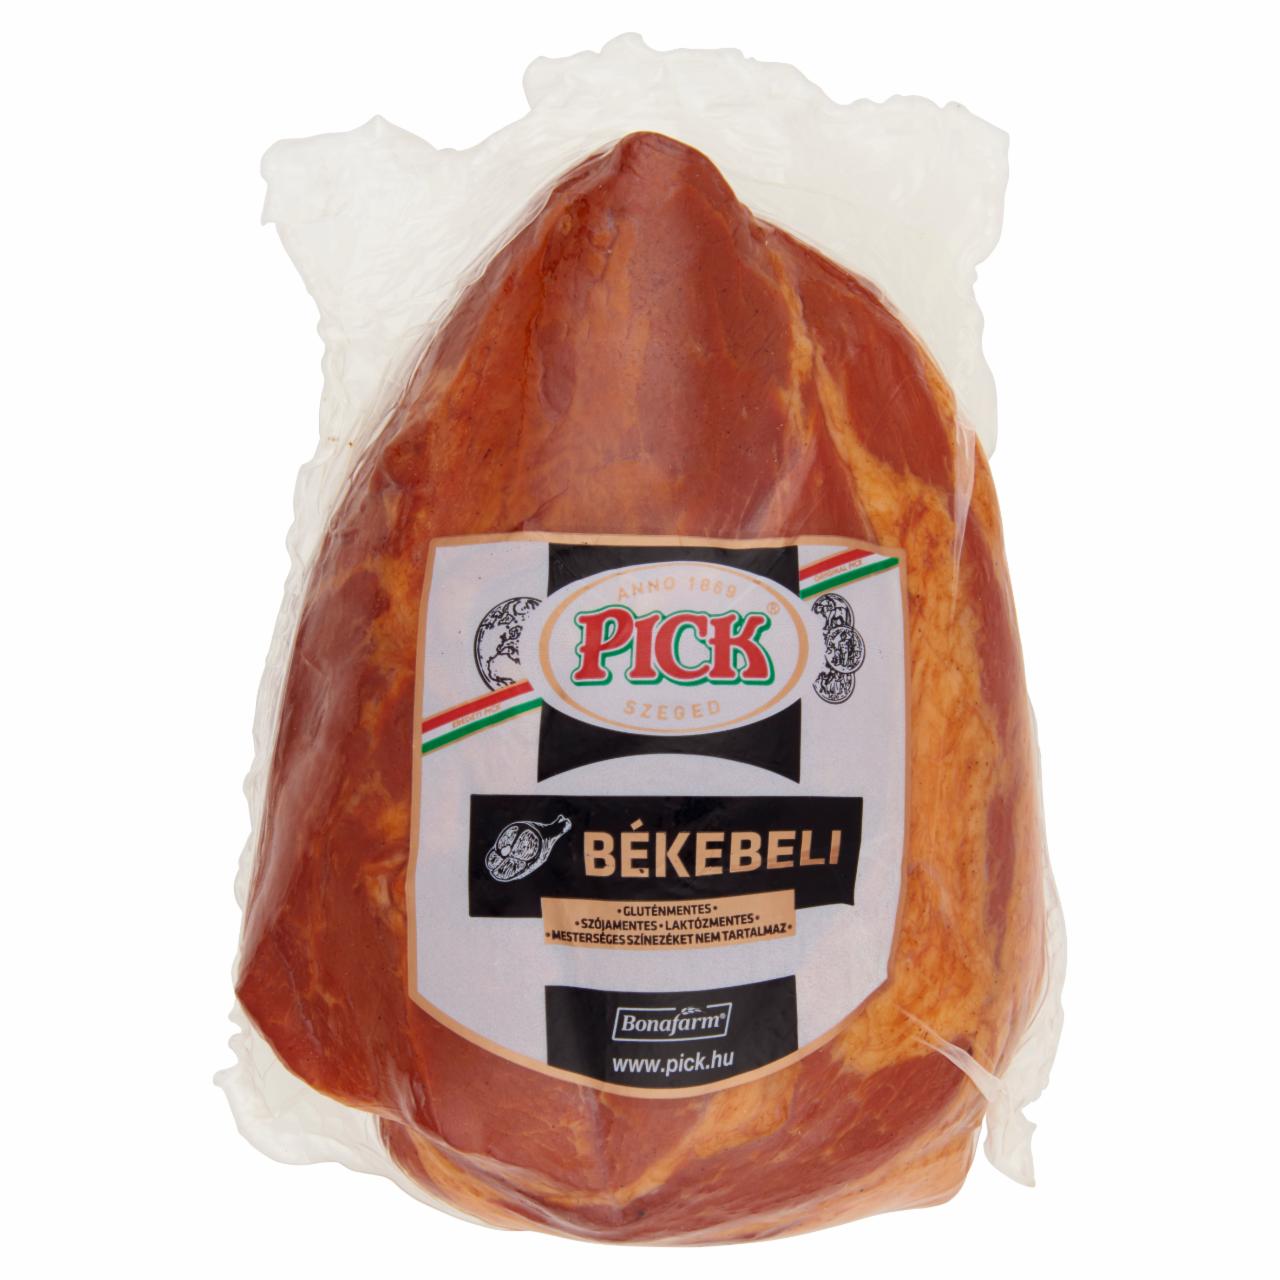 Photo - PICK Békebeli Smoked Pork Shoulder